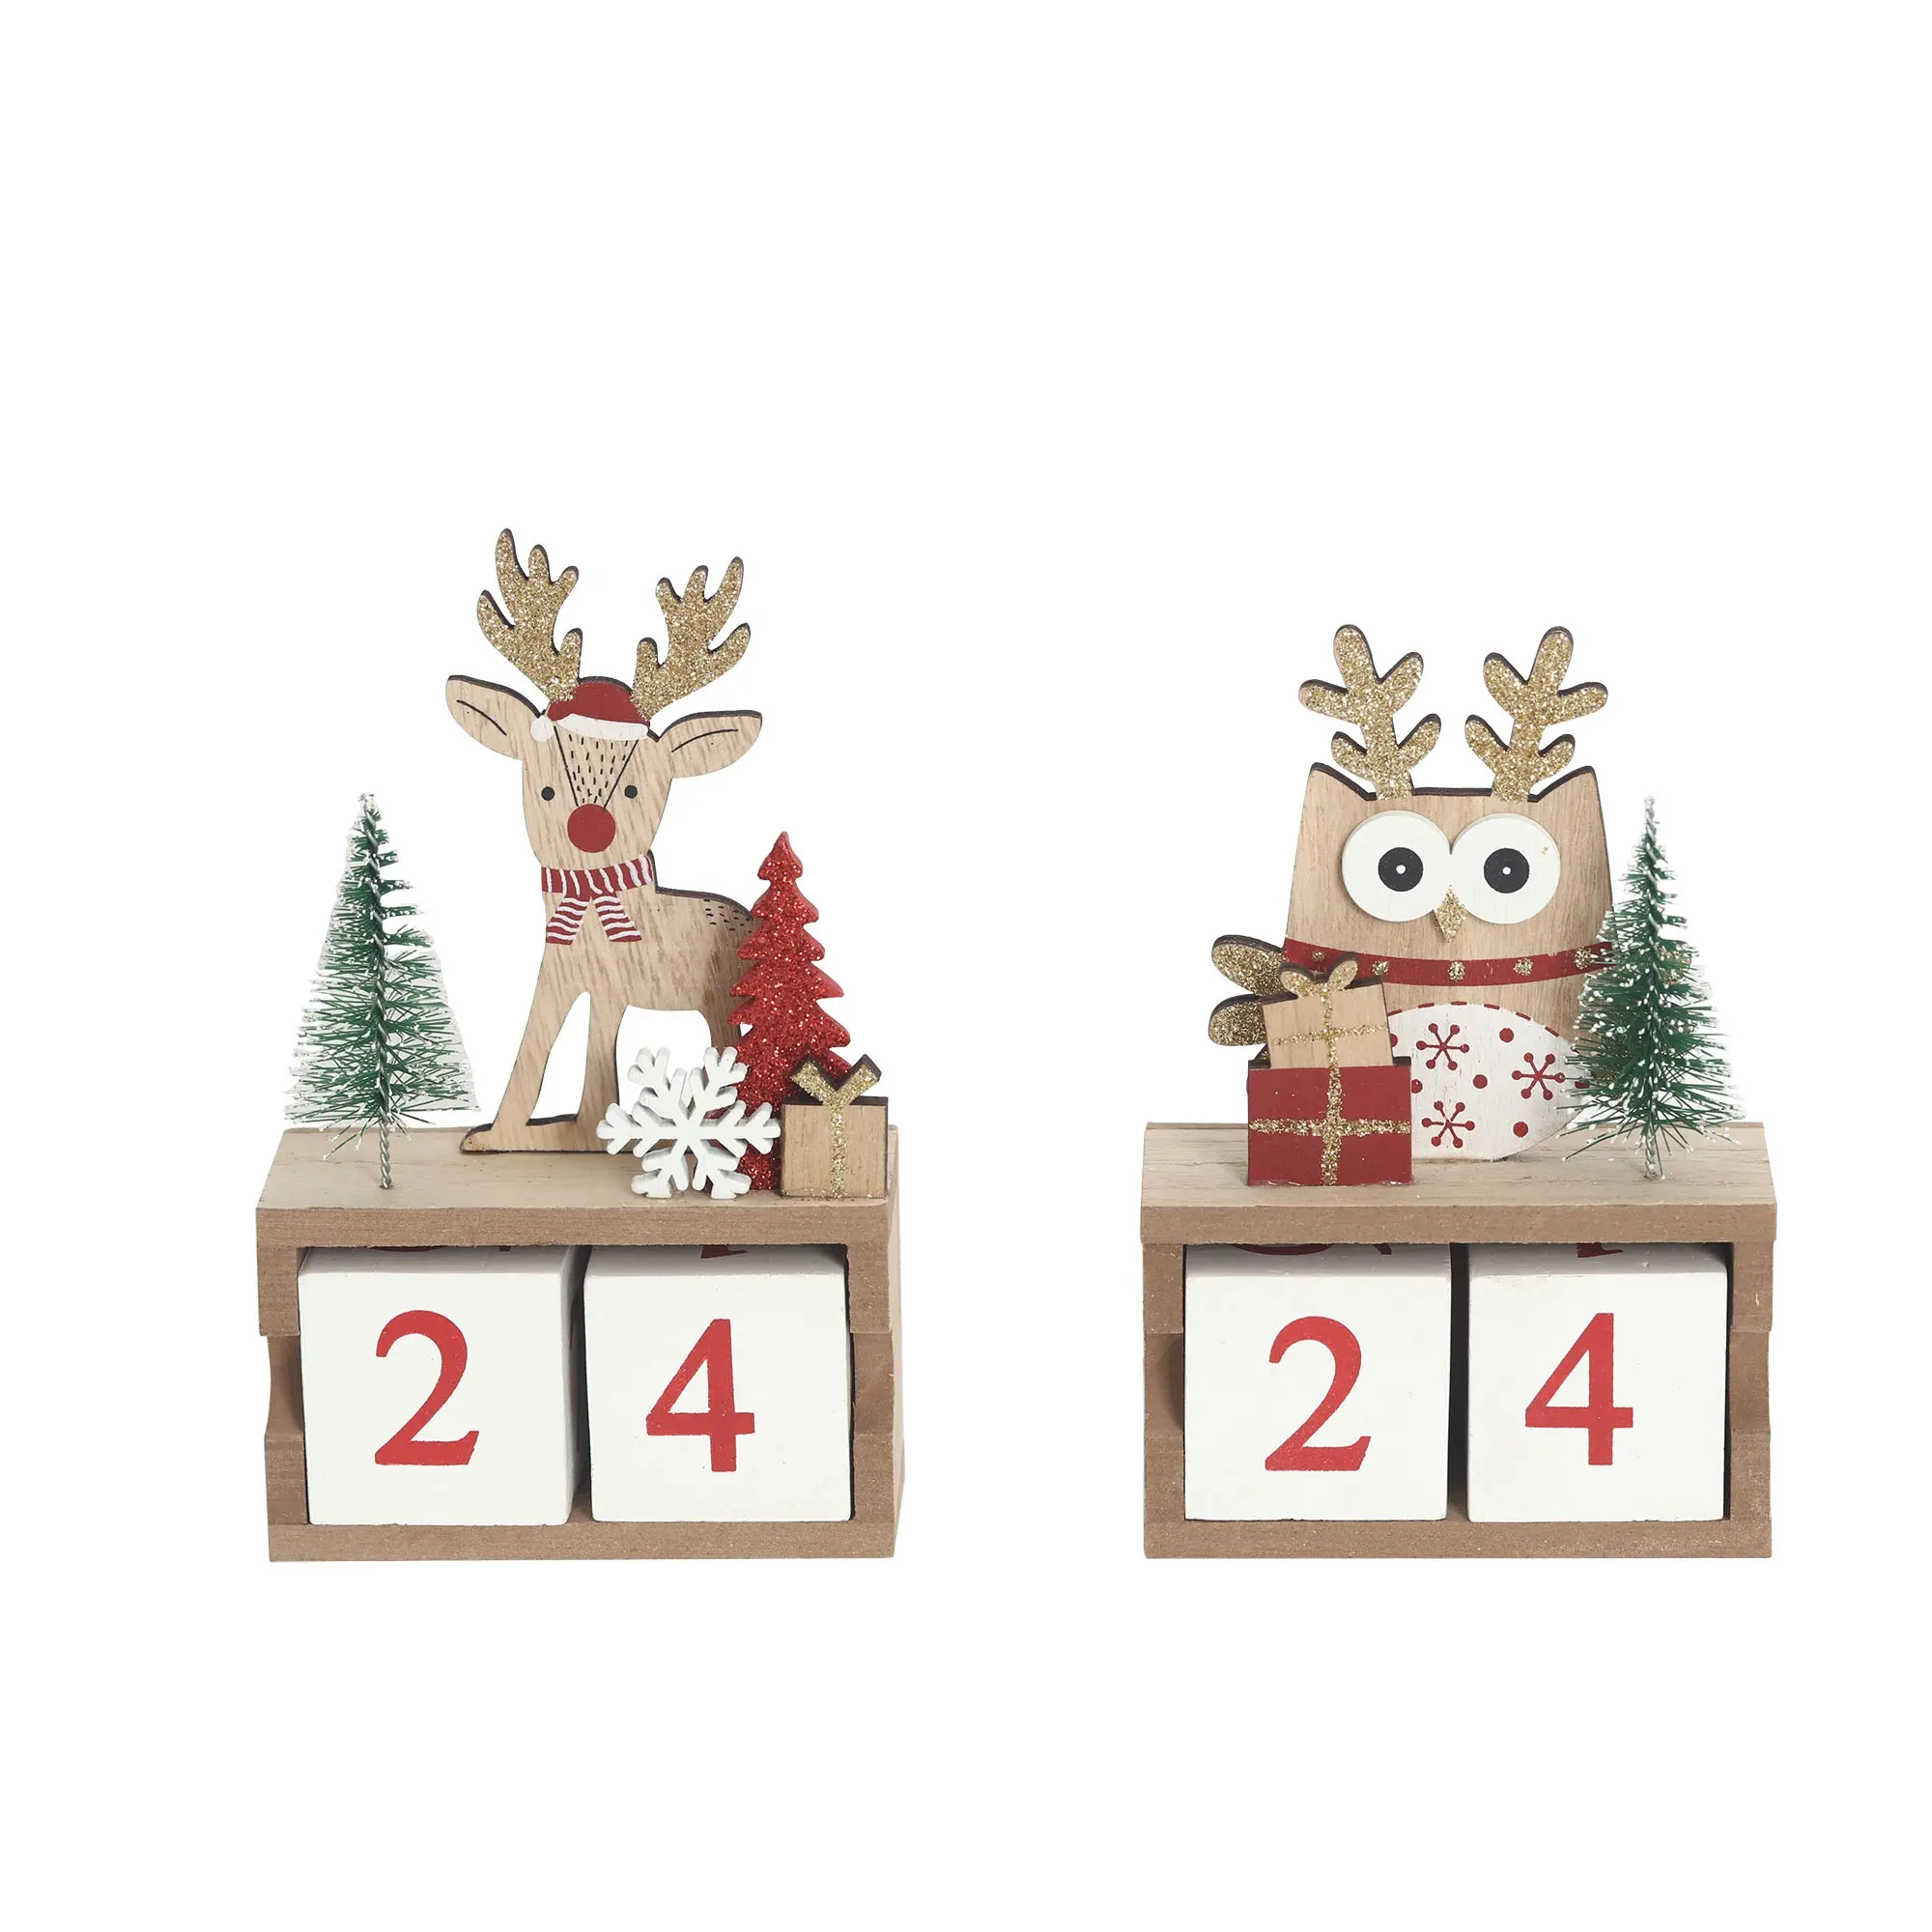 Wooden Christmas advent calendar block countdown to Christmas decoration 2 styles asst.